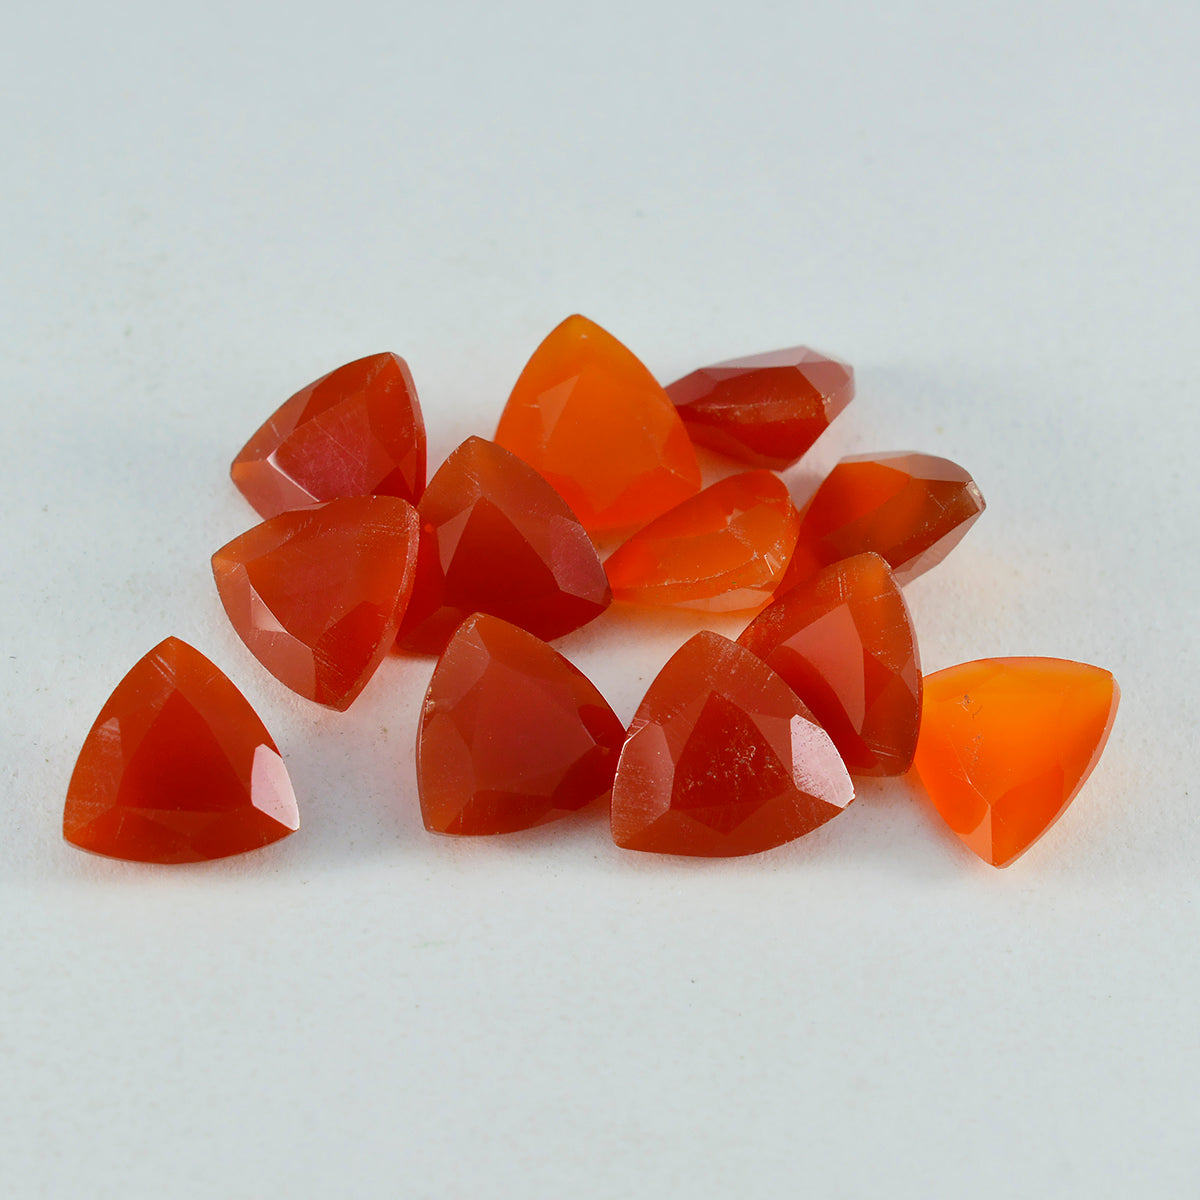 Riyogems 1PC Genuine Red Onyx Faceted 5x5 mm Trillion Shape great Quality Loose Gemstone